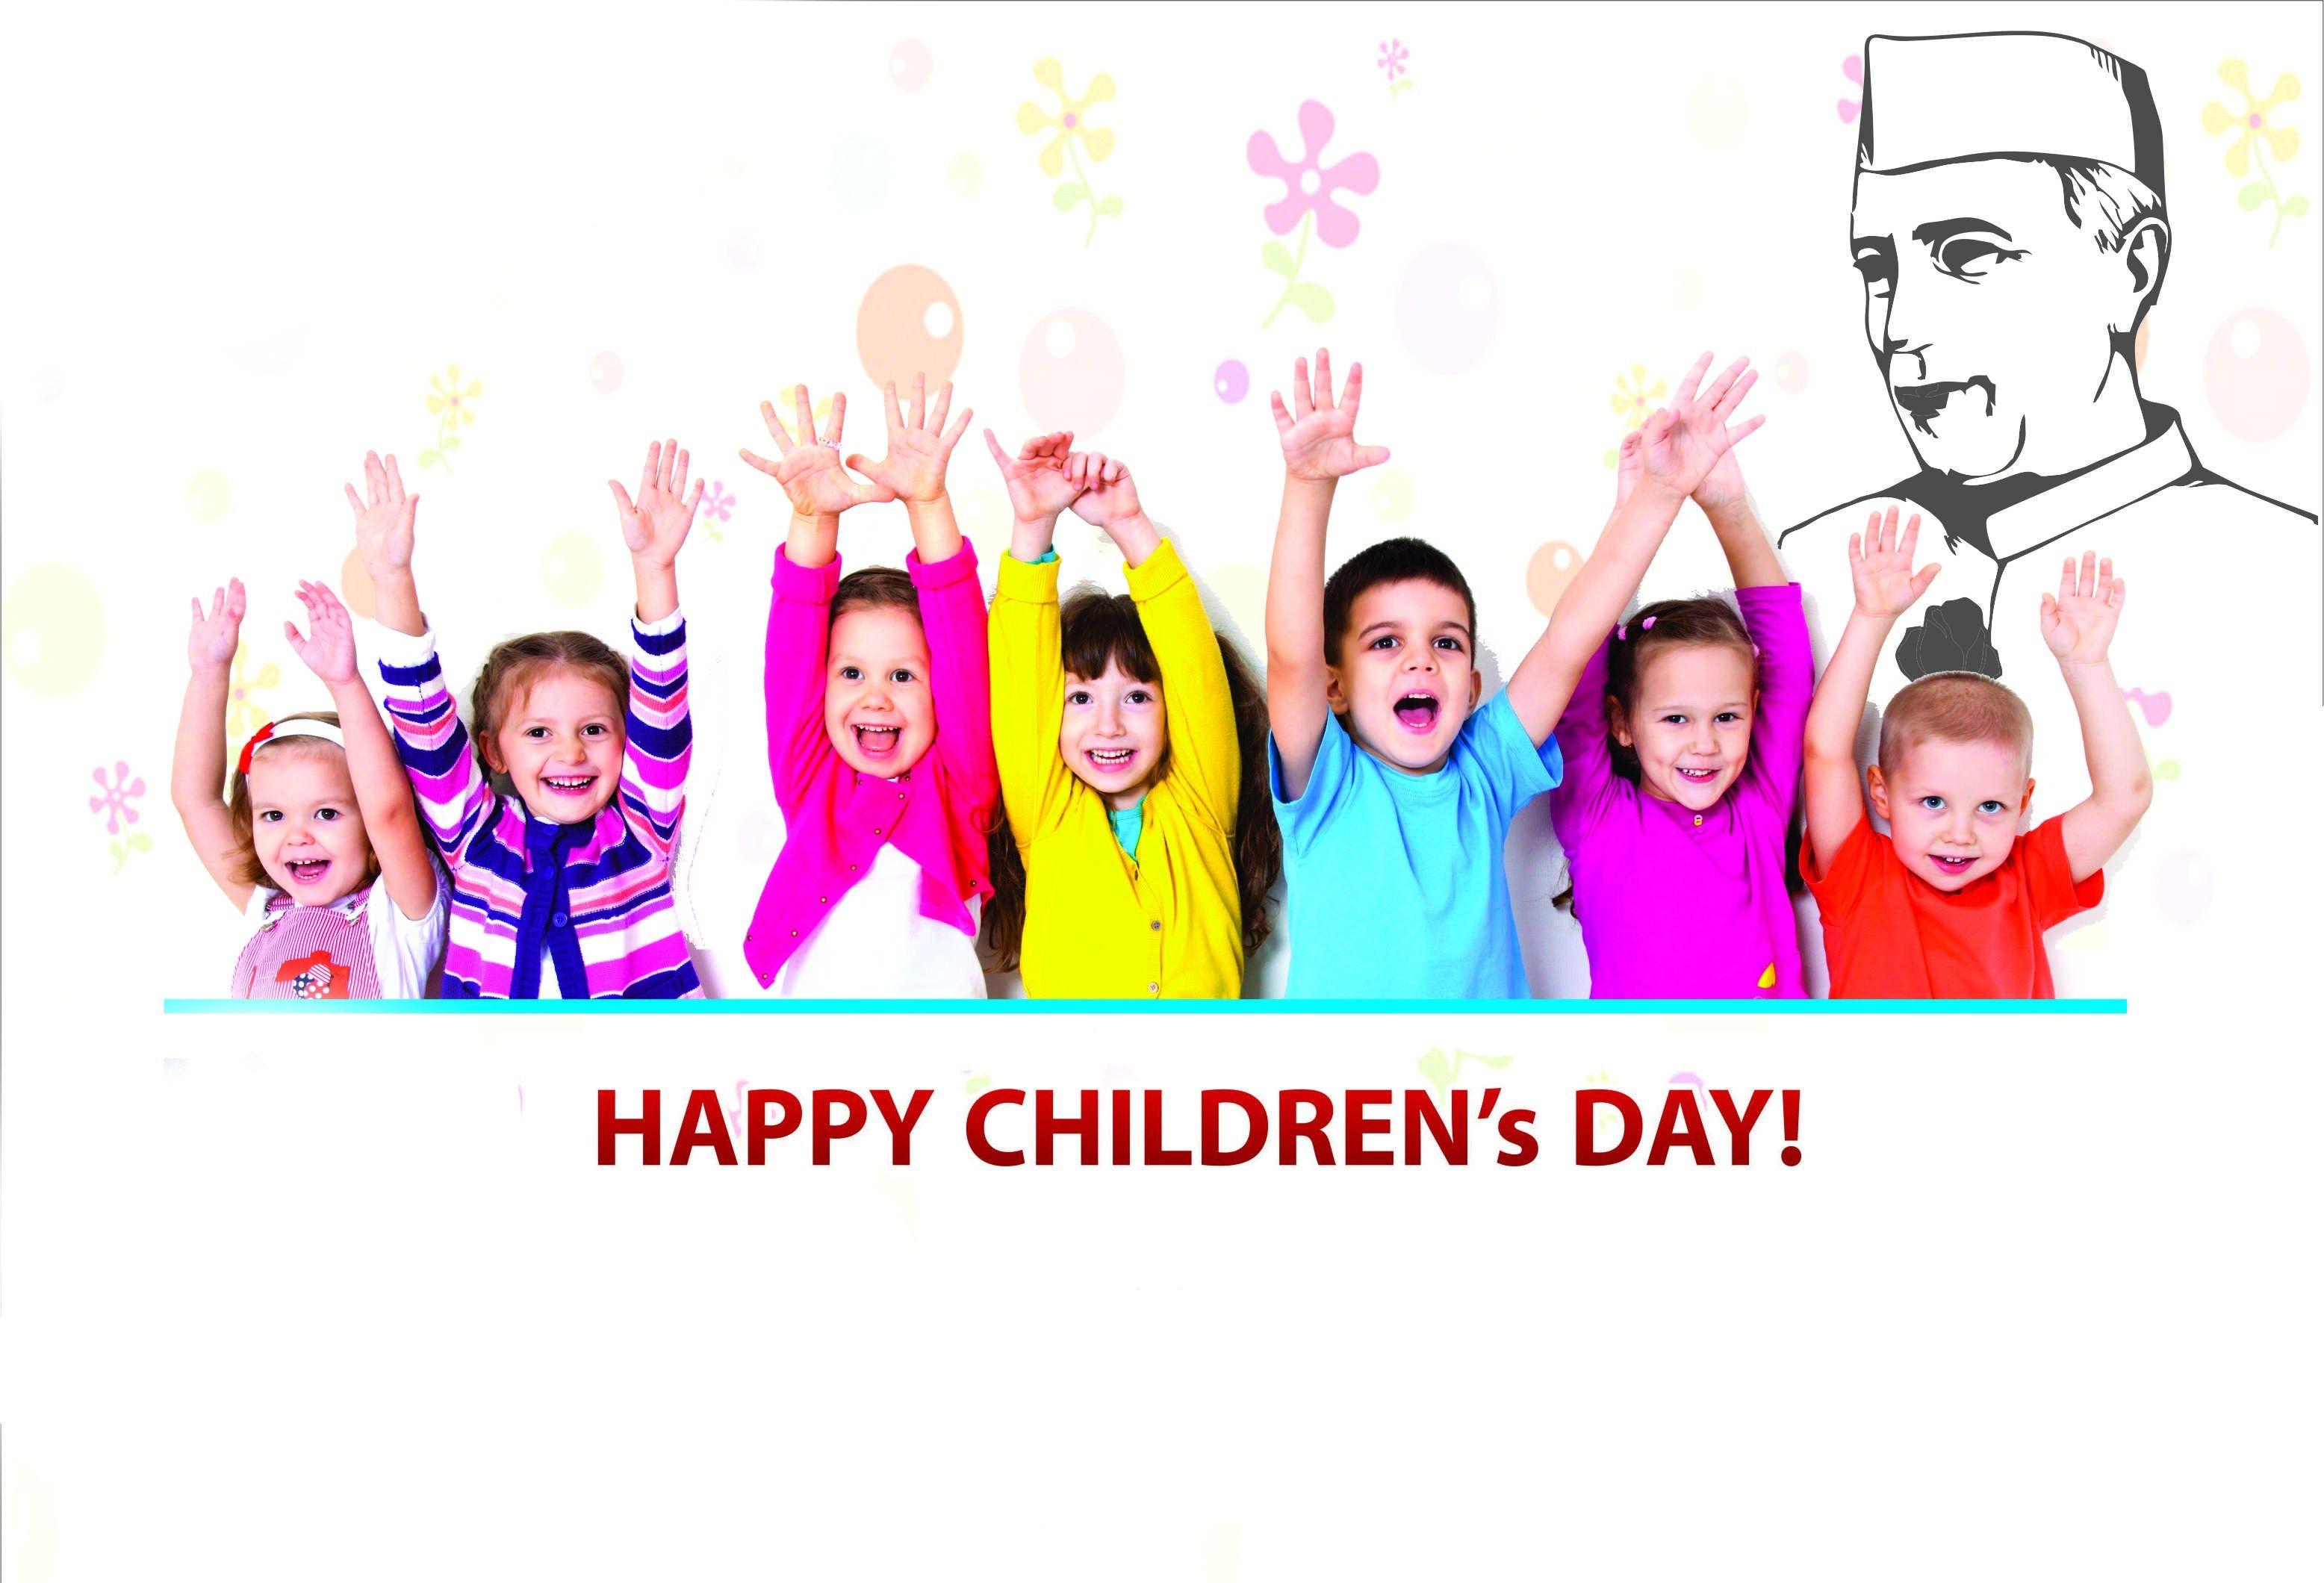 Happy Childrens Day 2017 HD Image Wallpaper, Whatsapp DP, Pics